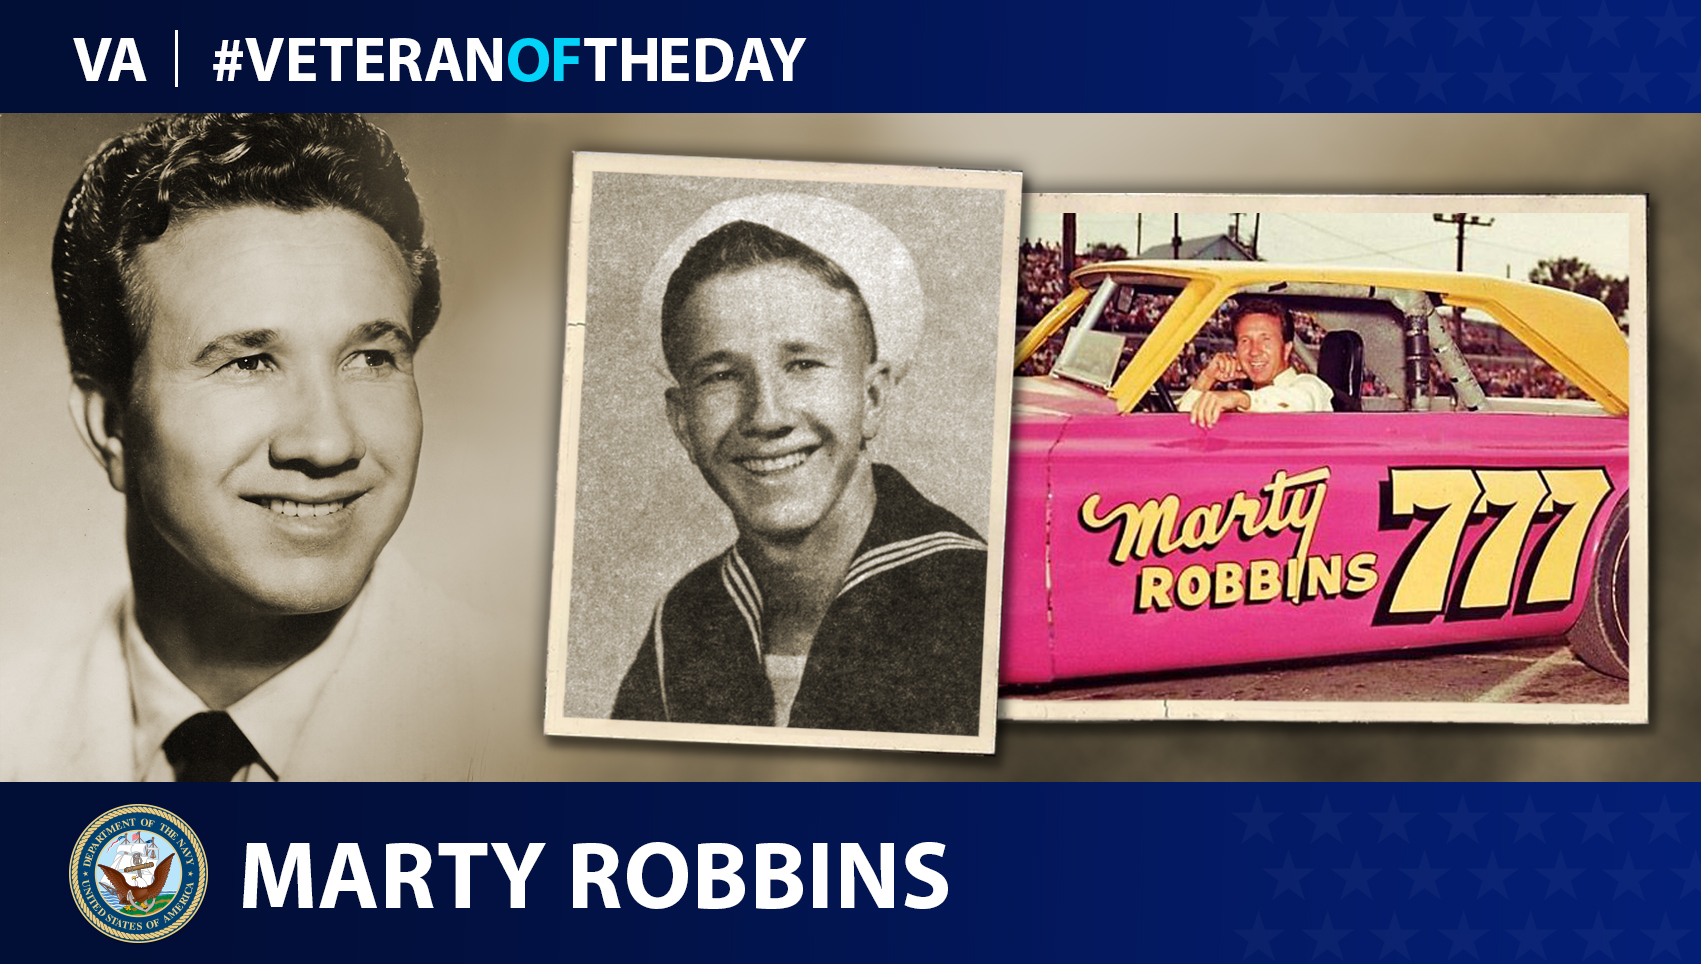 U.S. Navy Veteran Marty Robbins is today’s Veteran of the Day.